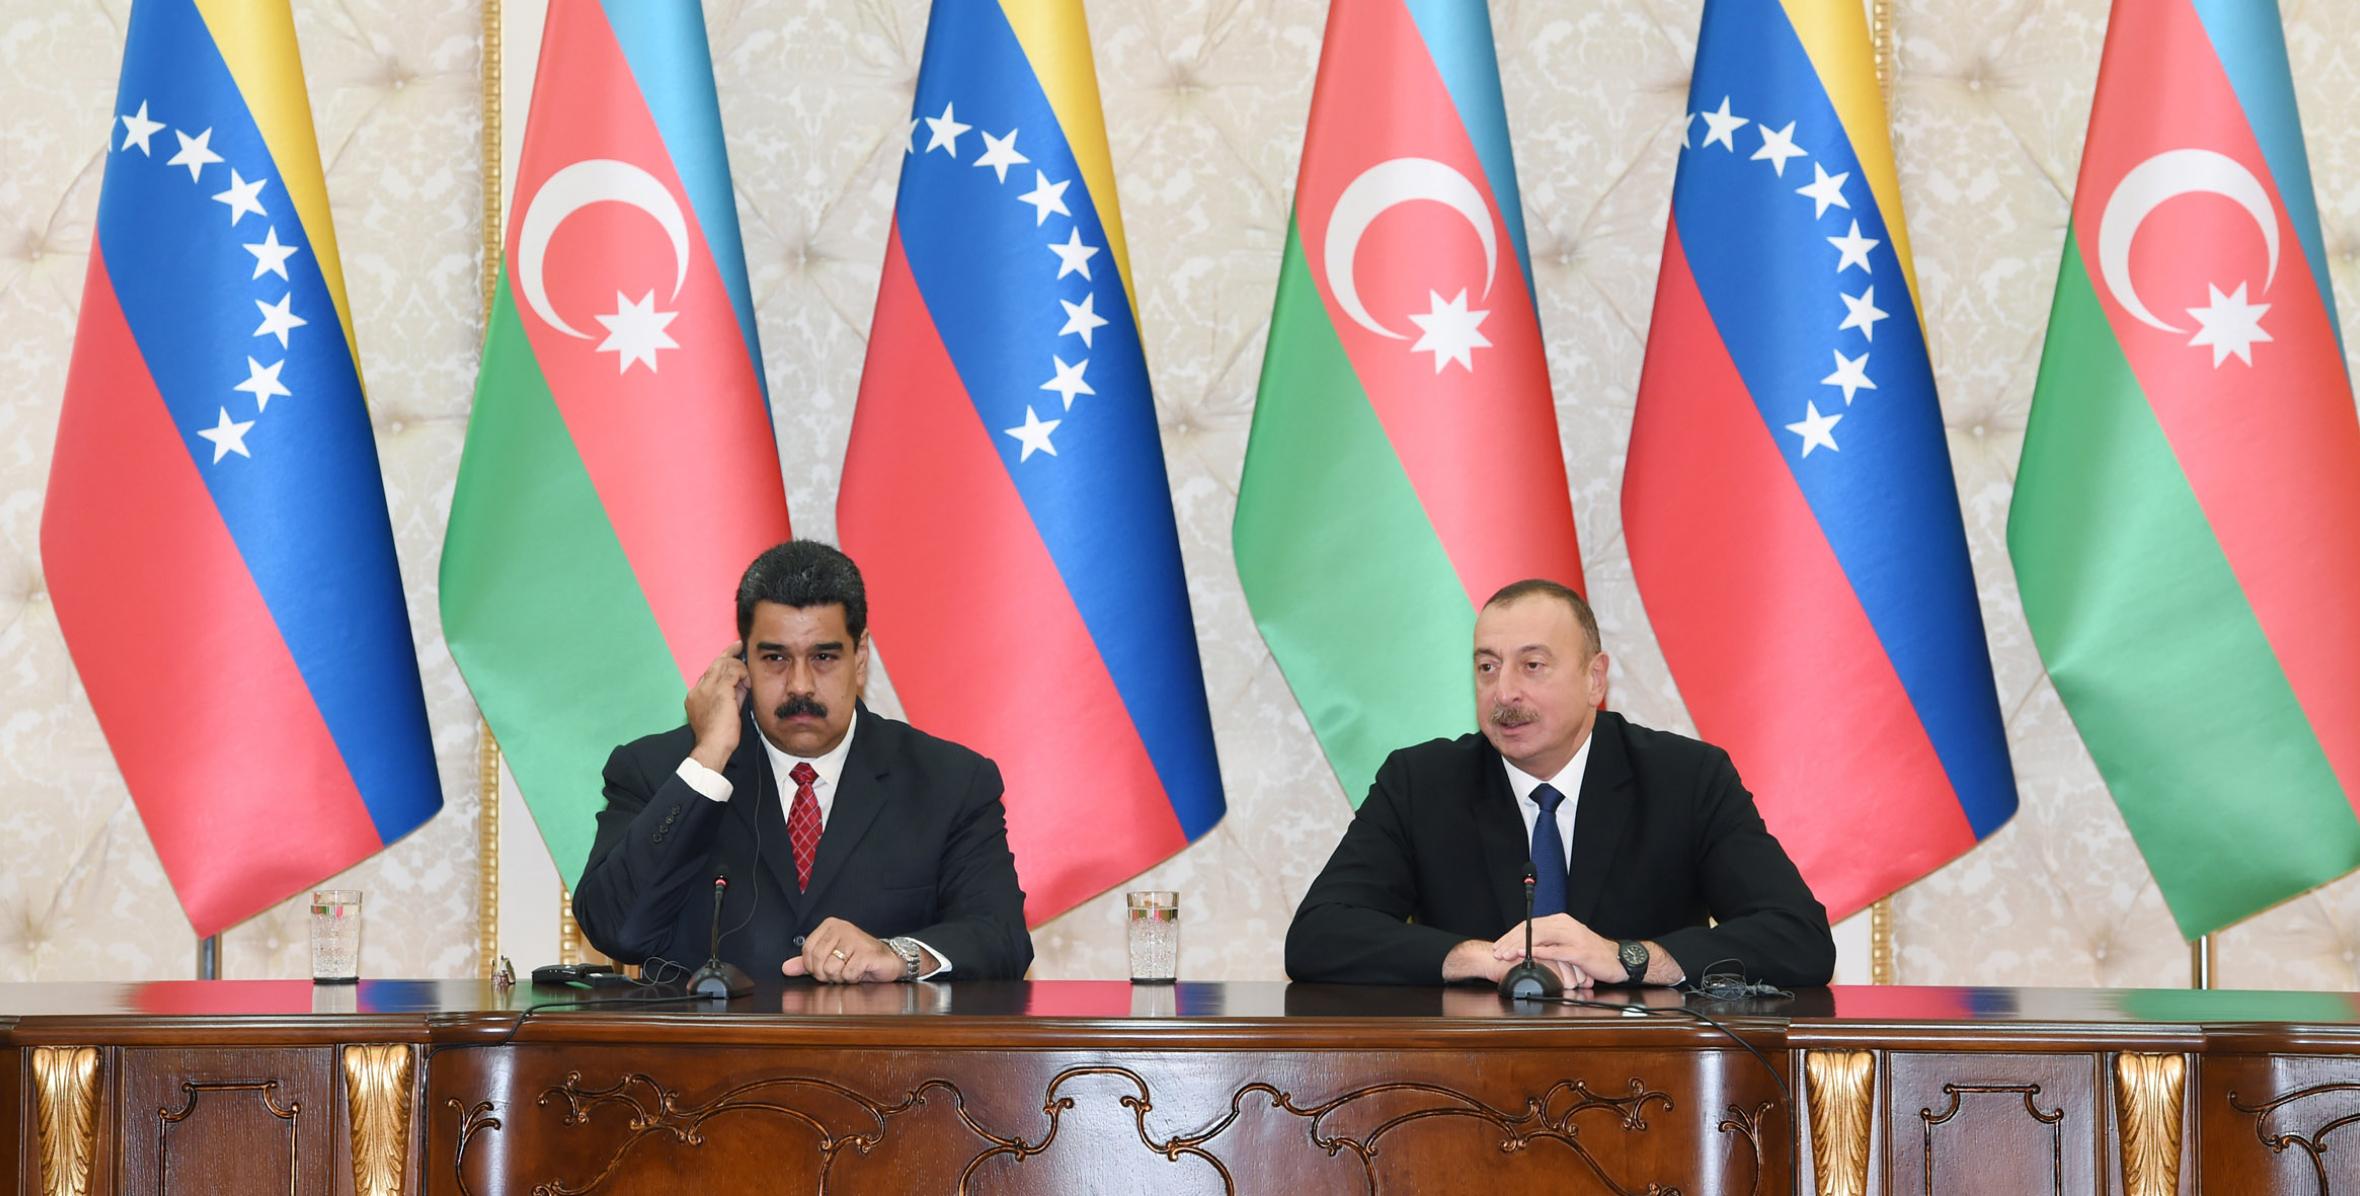 Ilham Aliyev and President Nicolas Maduro made statements for the press